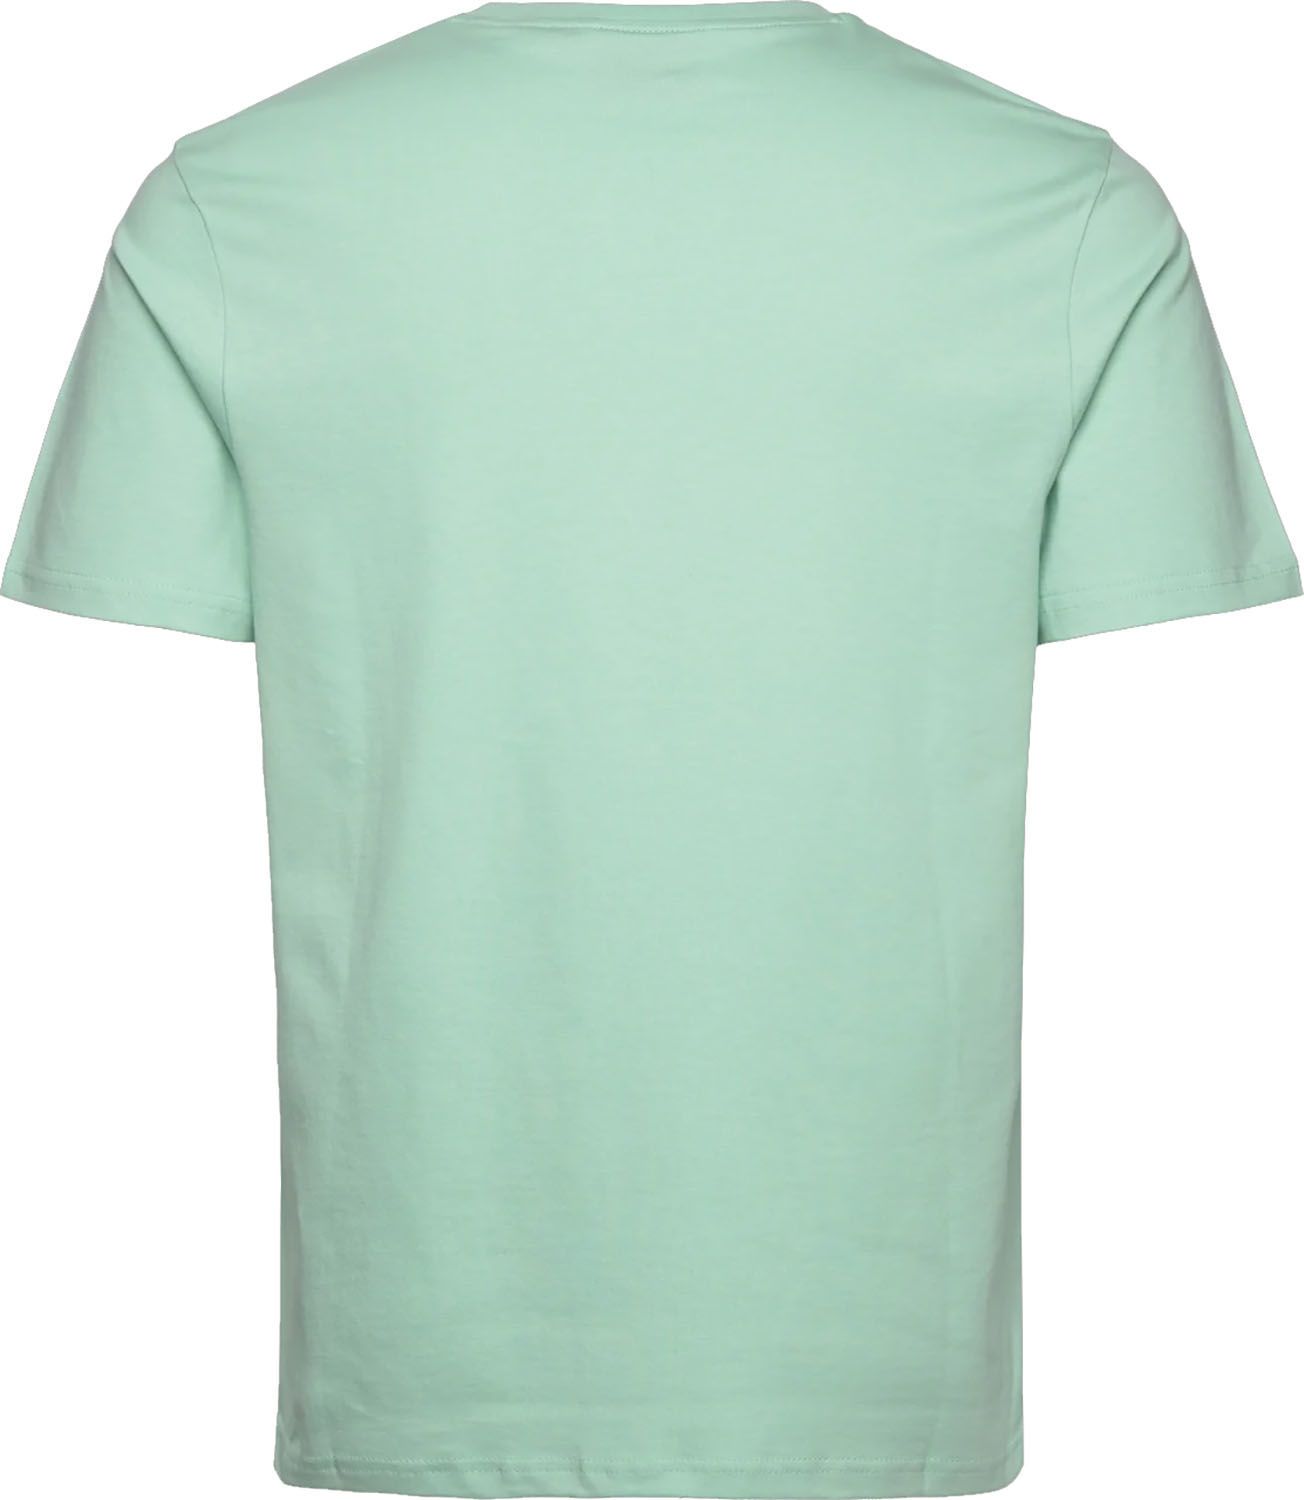 Lyle & Scott T-shirt Turquoise